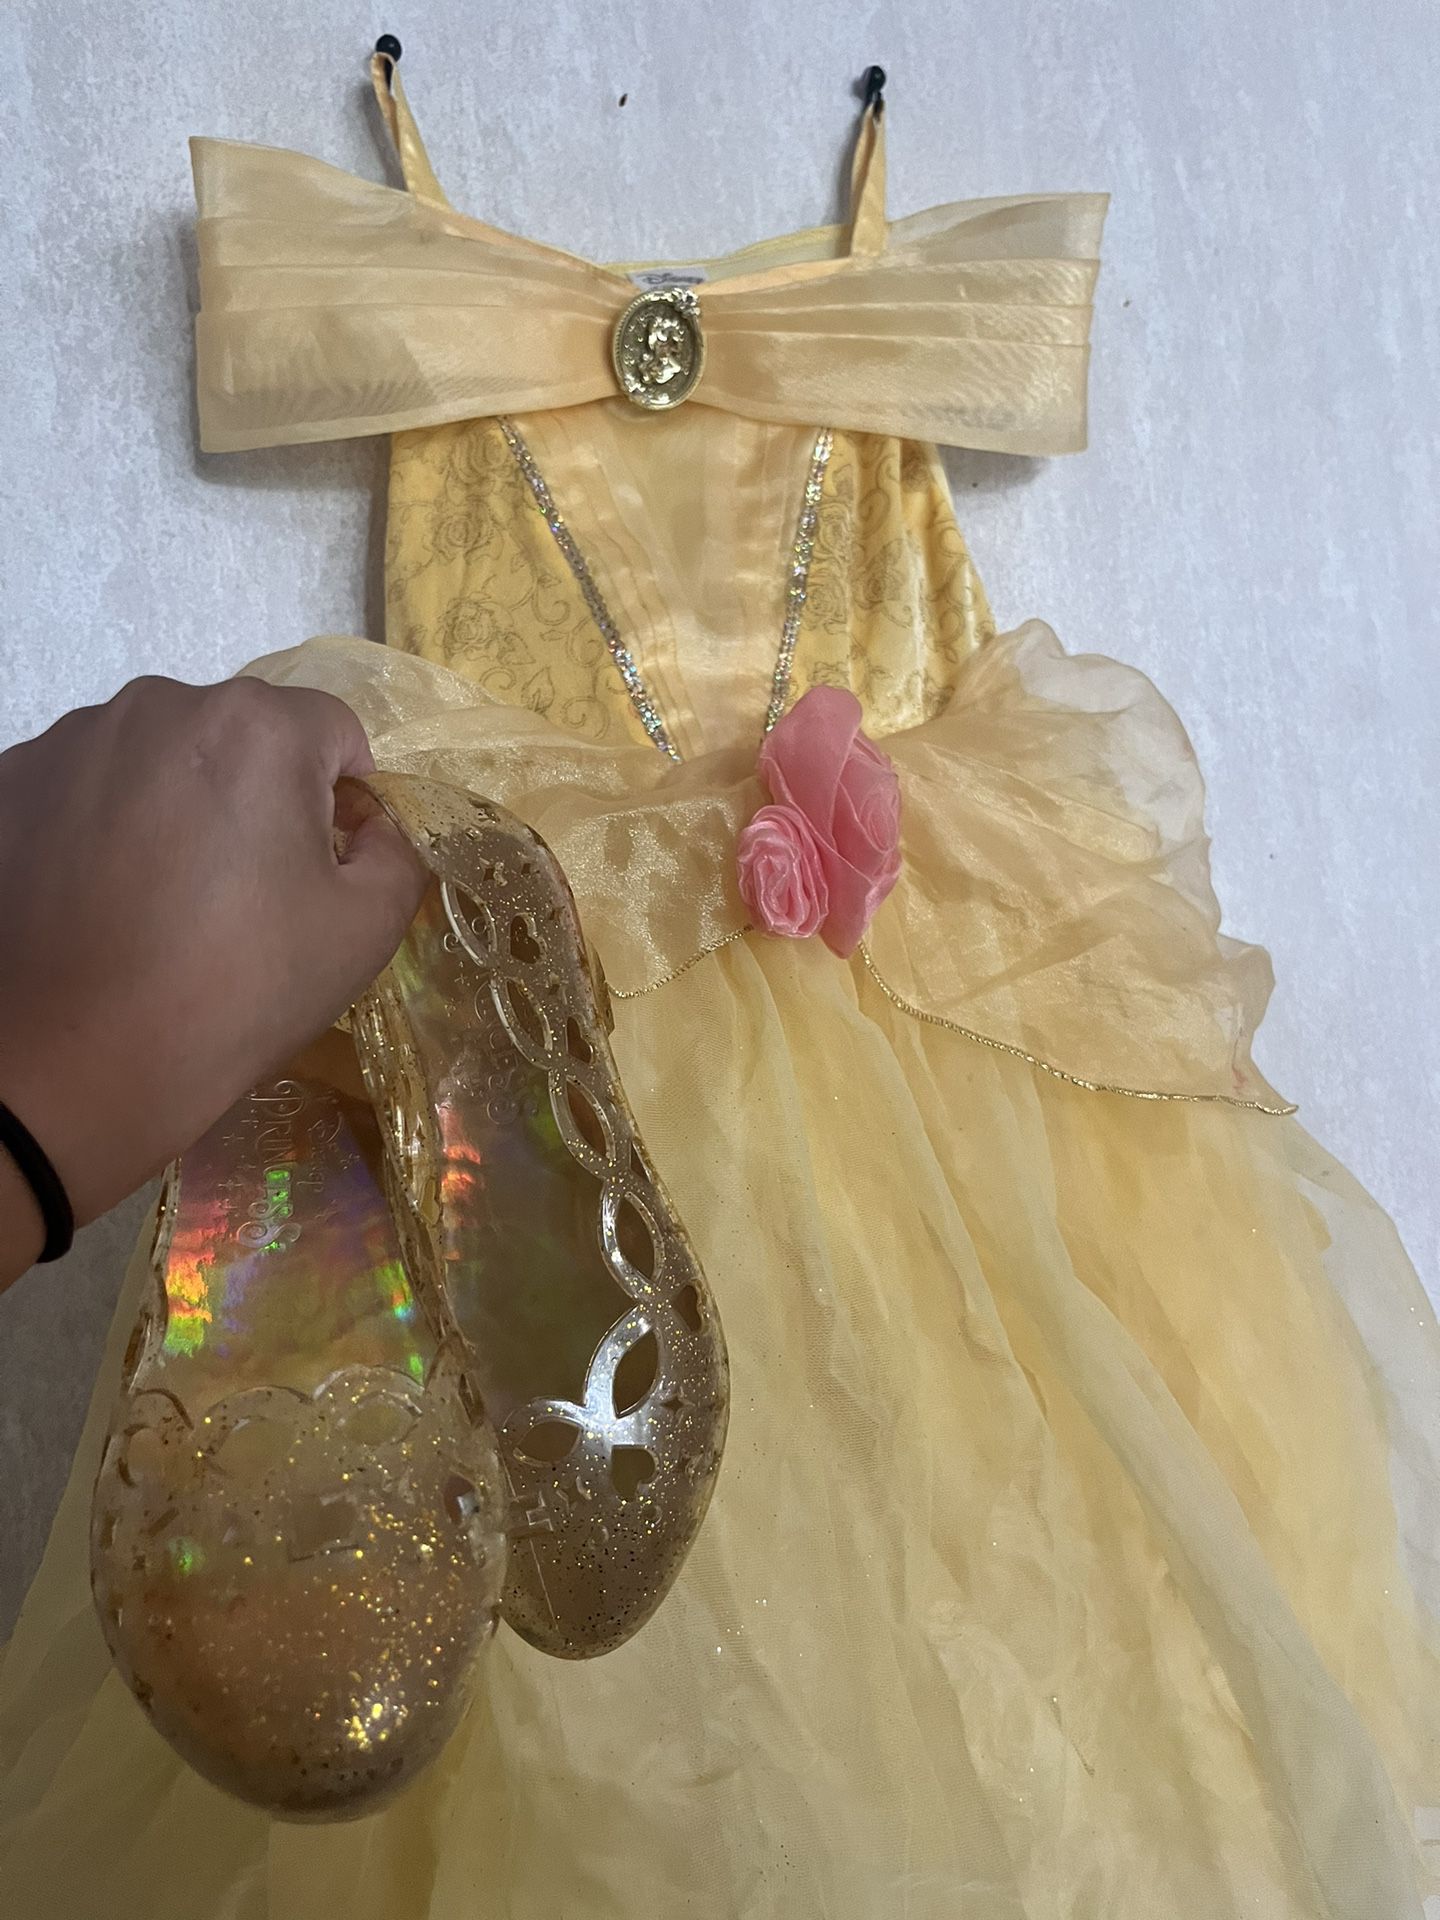 Disney Princess Belle Costume For Kids With Dress Up Heels + Unicorn Dress